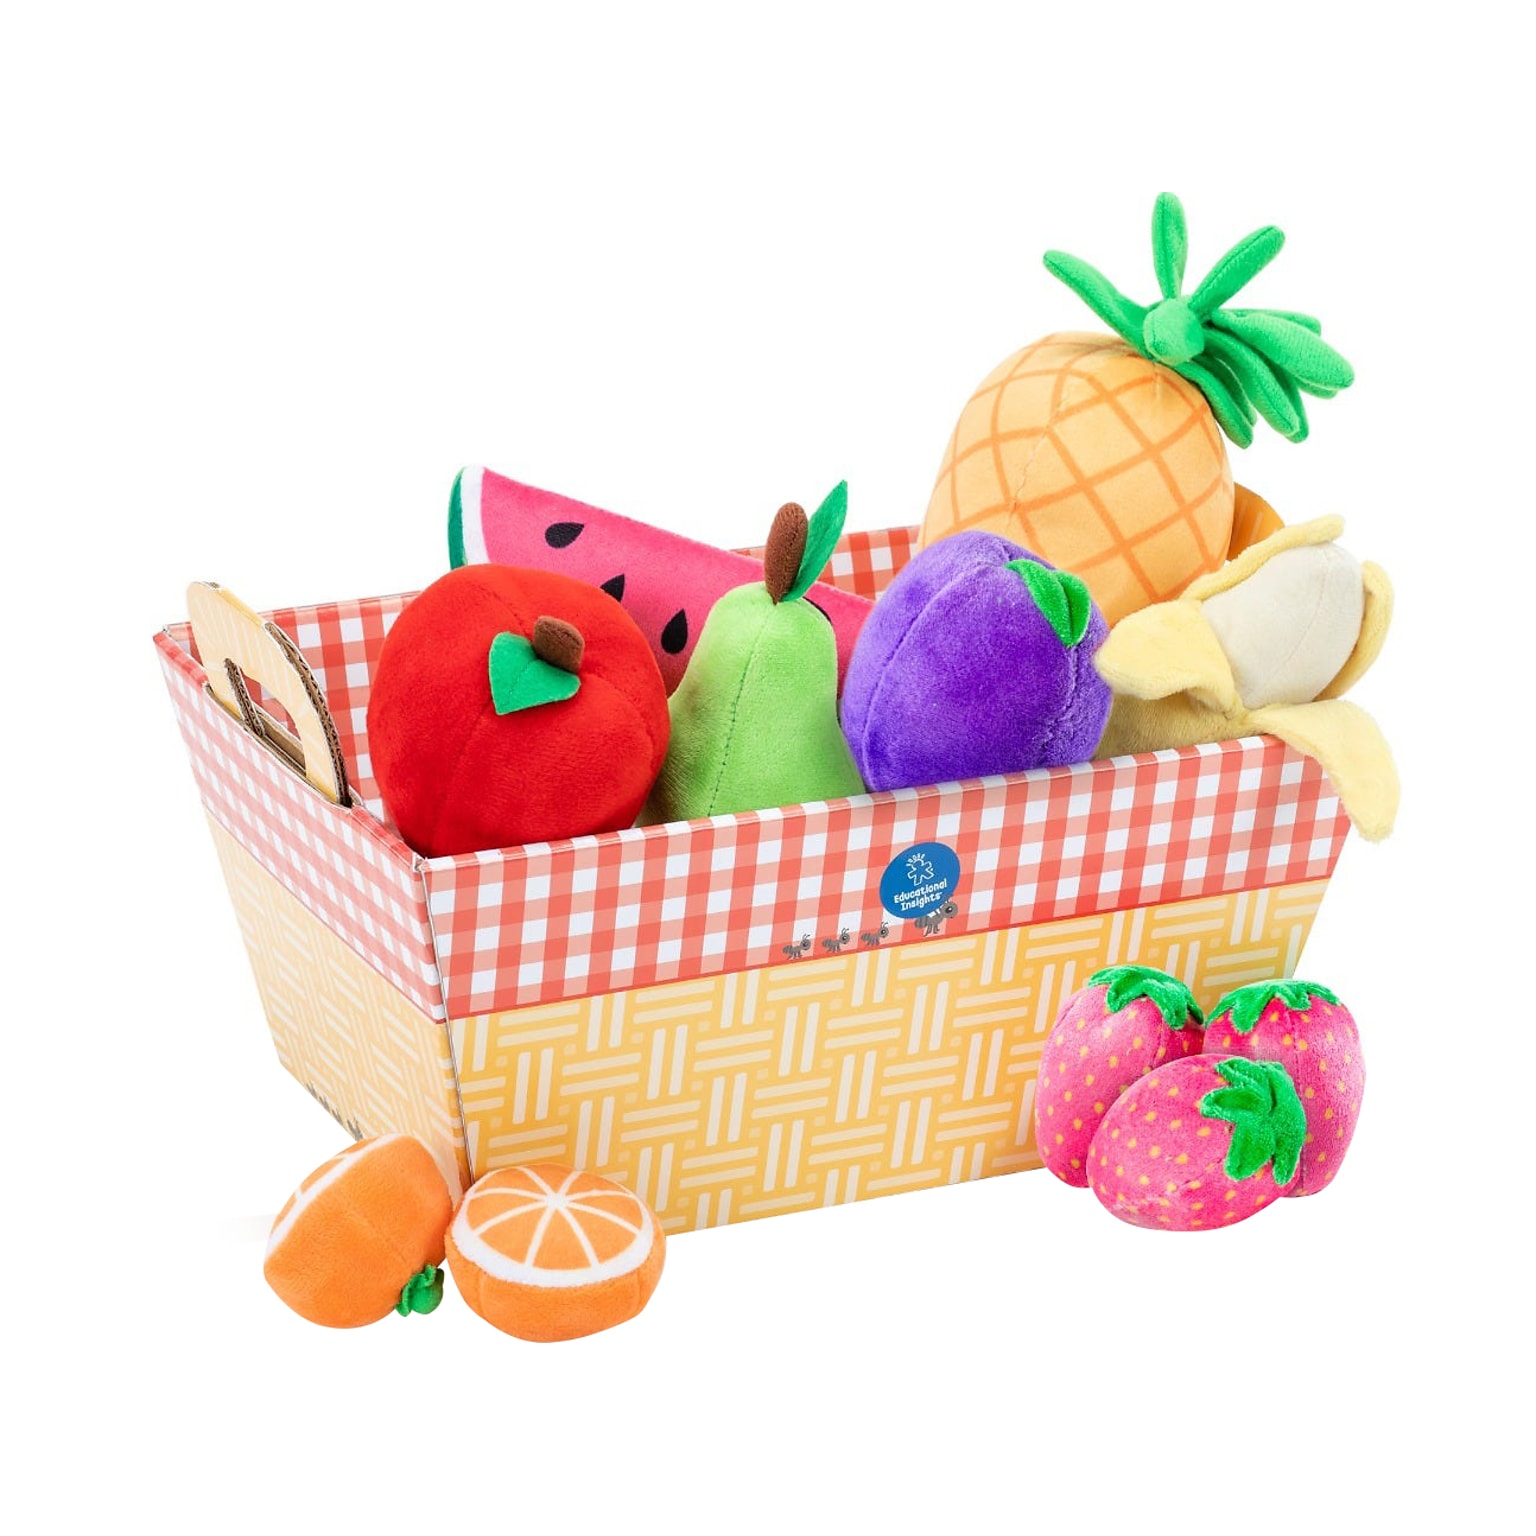 Educational Insights Plush Fruit Basket, 0.85 x 7.5 x 4.65, Multicolor (3685)